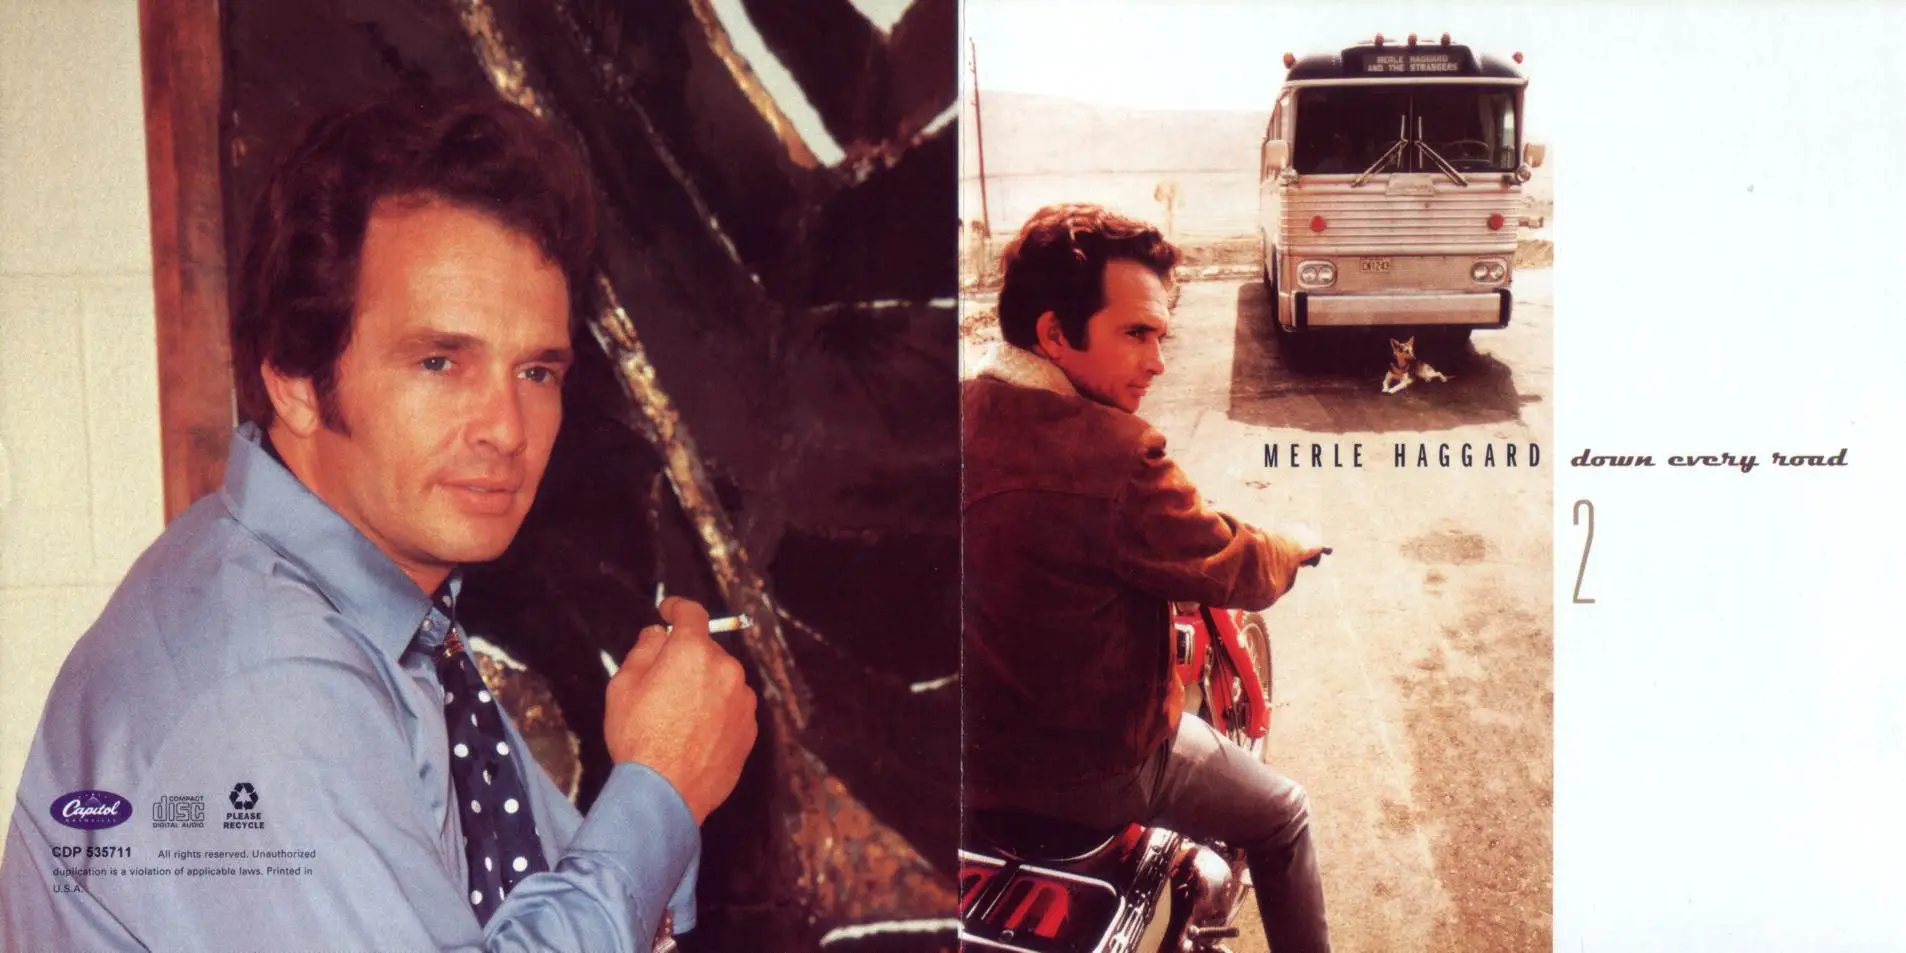 Merle Haggard - Down Every Road 1962-1994 [4CD Box Set] (1996) *Repost ...